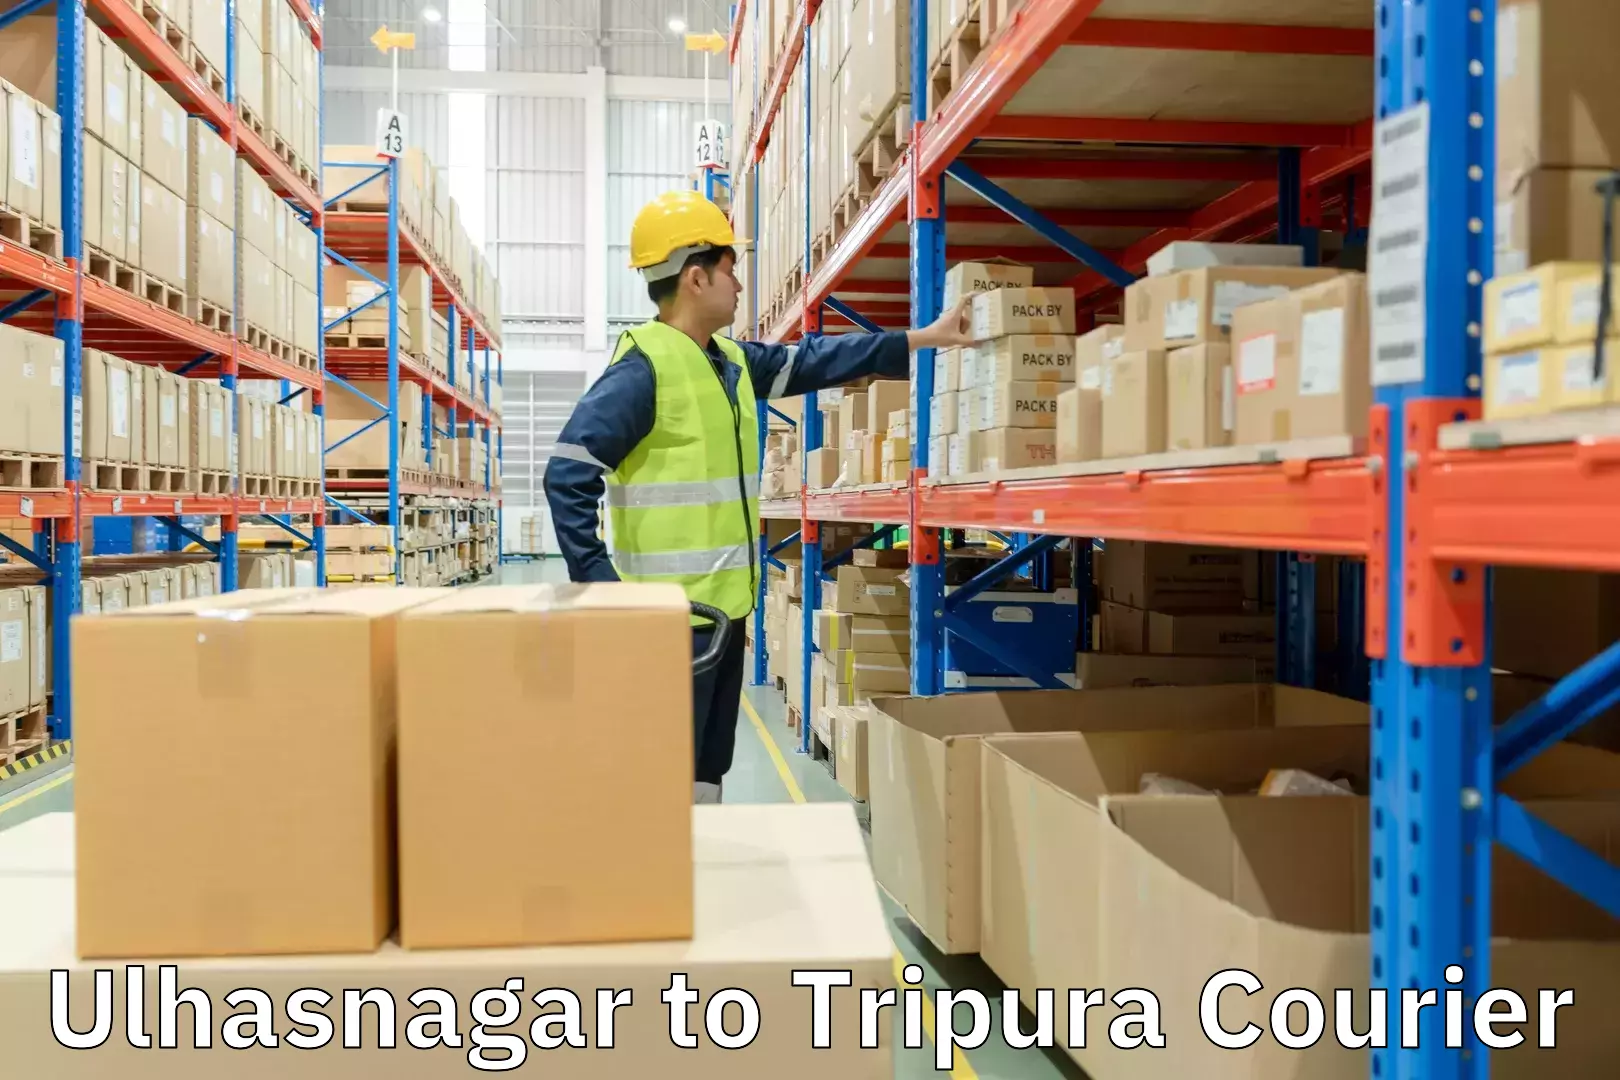 Global logistics network Ulhasnagar to Tripura